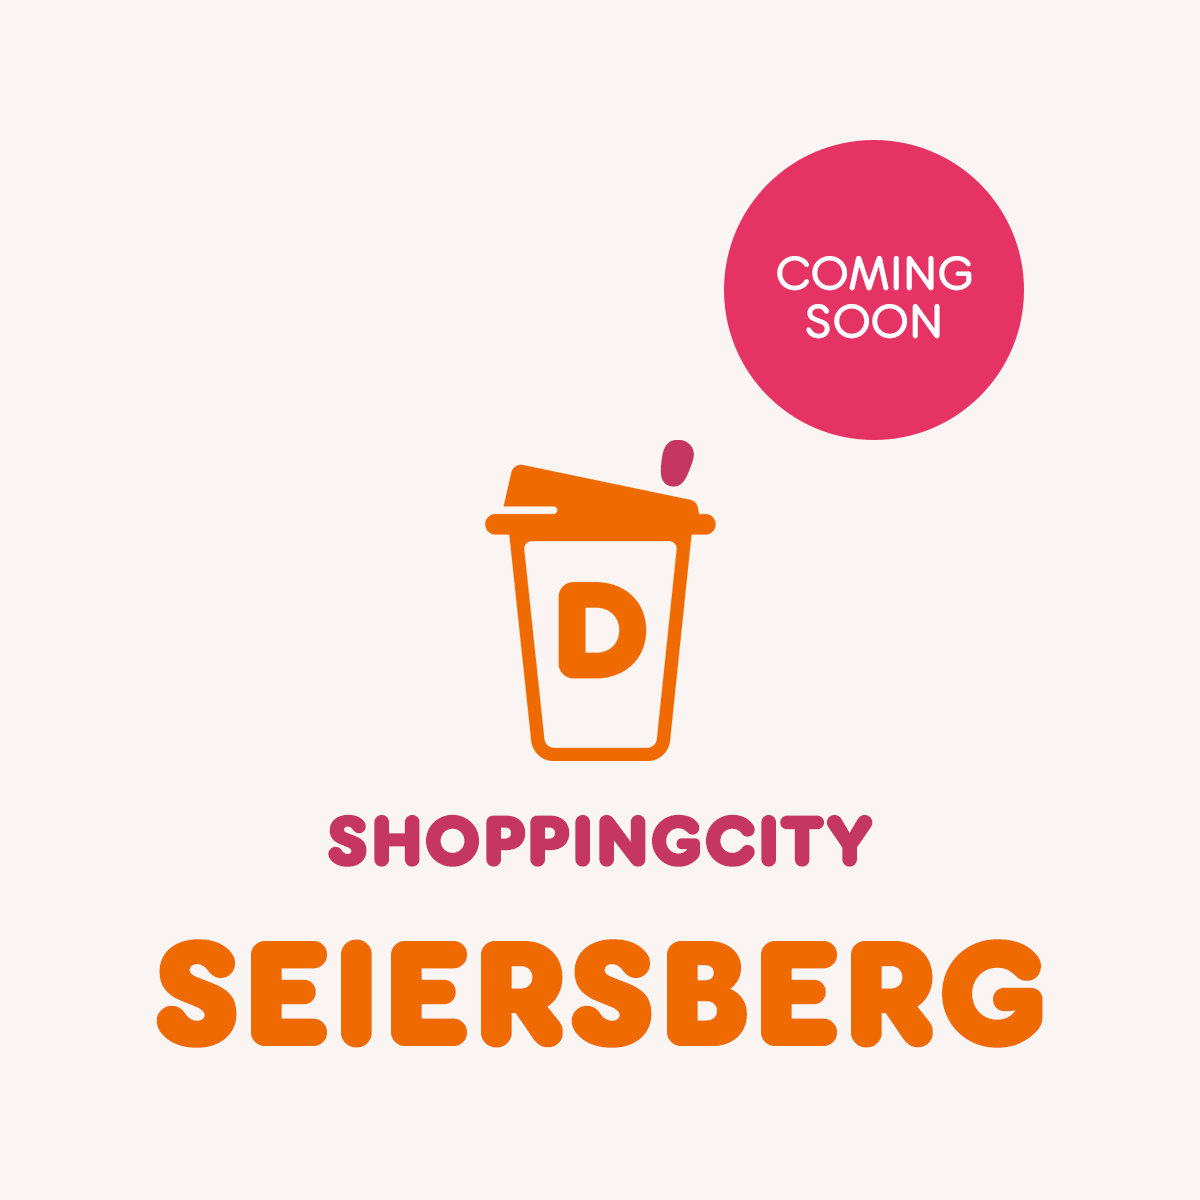 ShoppingCity Seiersberg COMING SOON